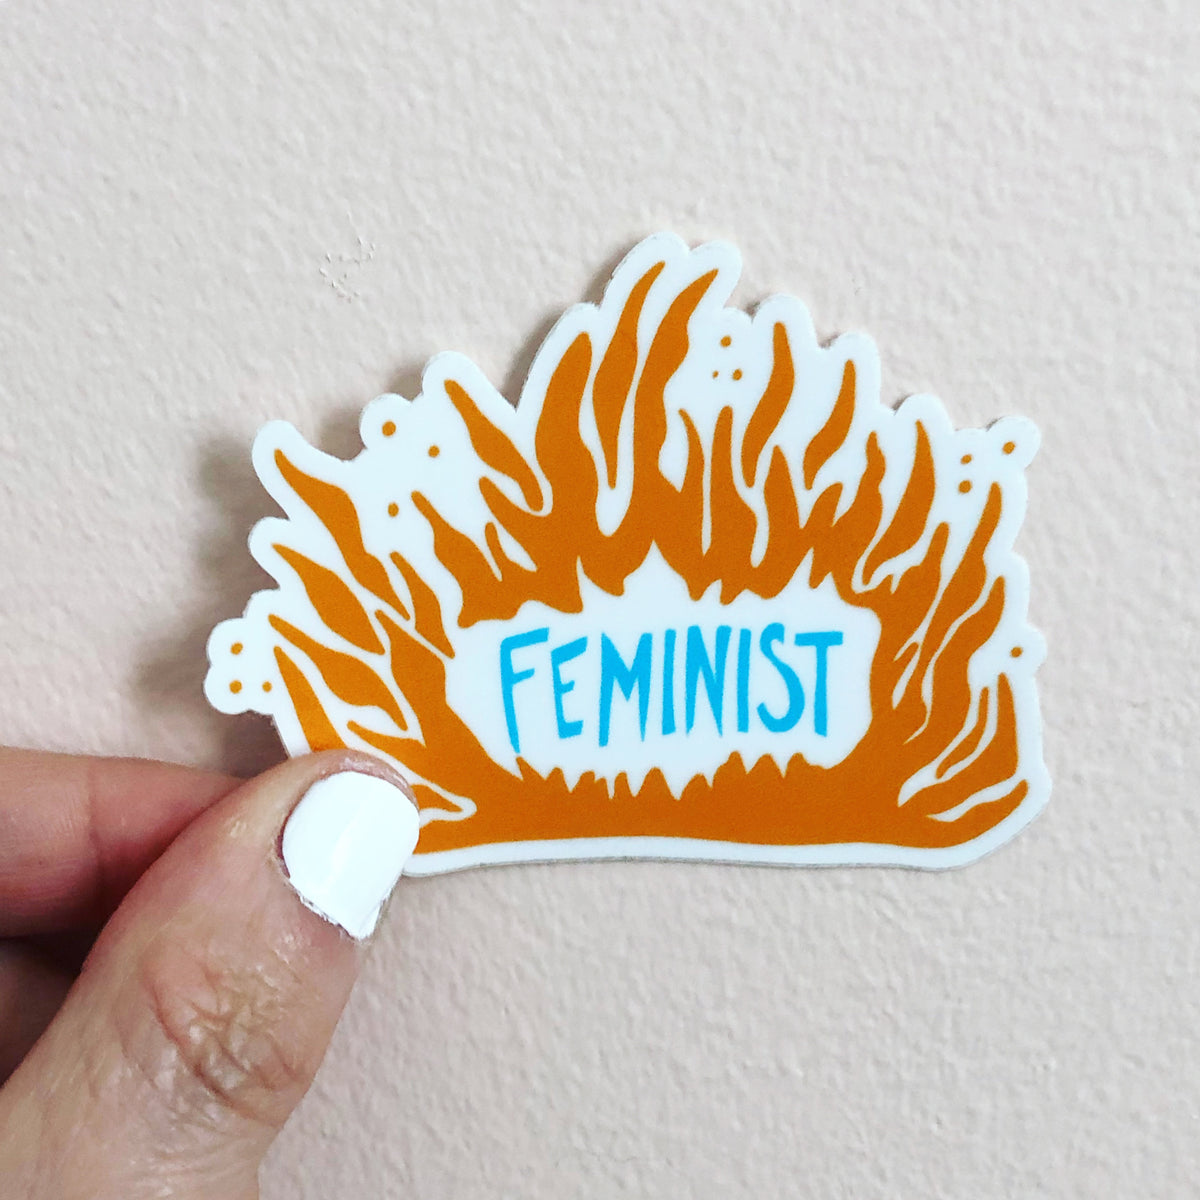 Feminsit sticker, women empowerment sticker by Abigail Gray Swartz